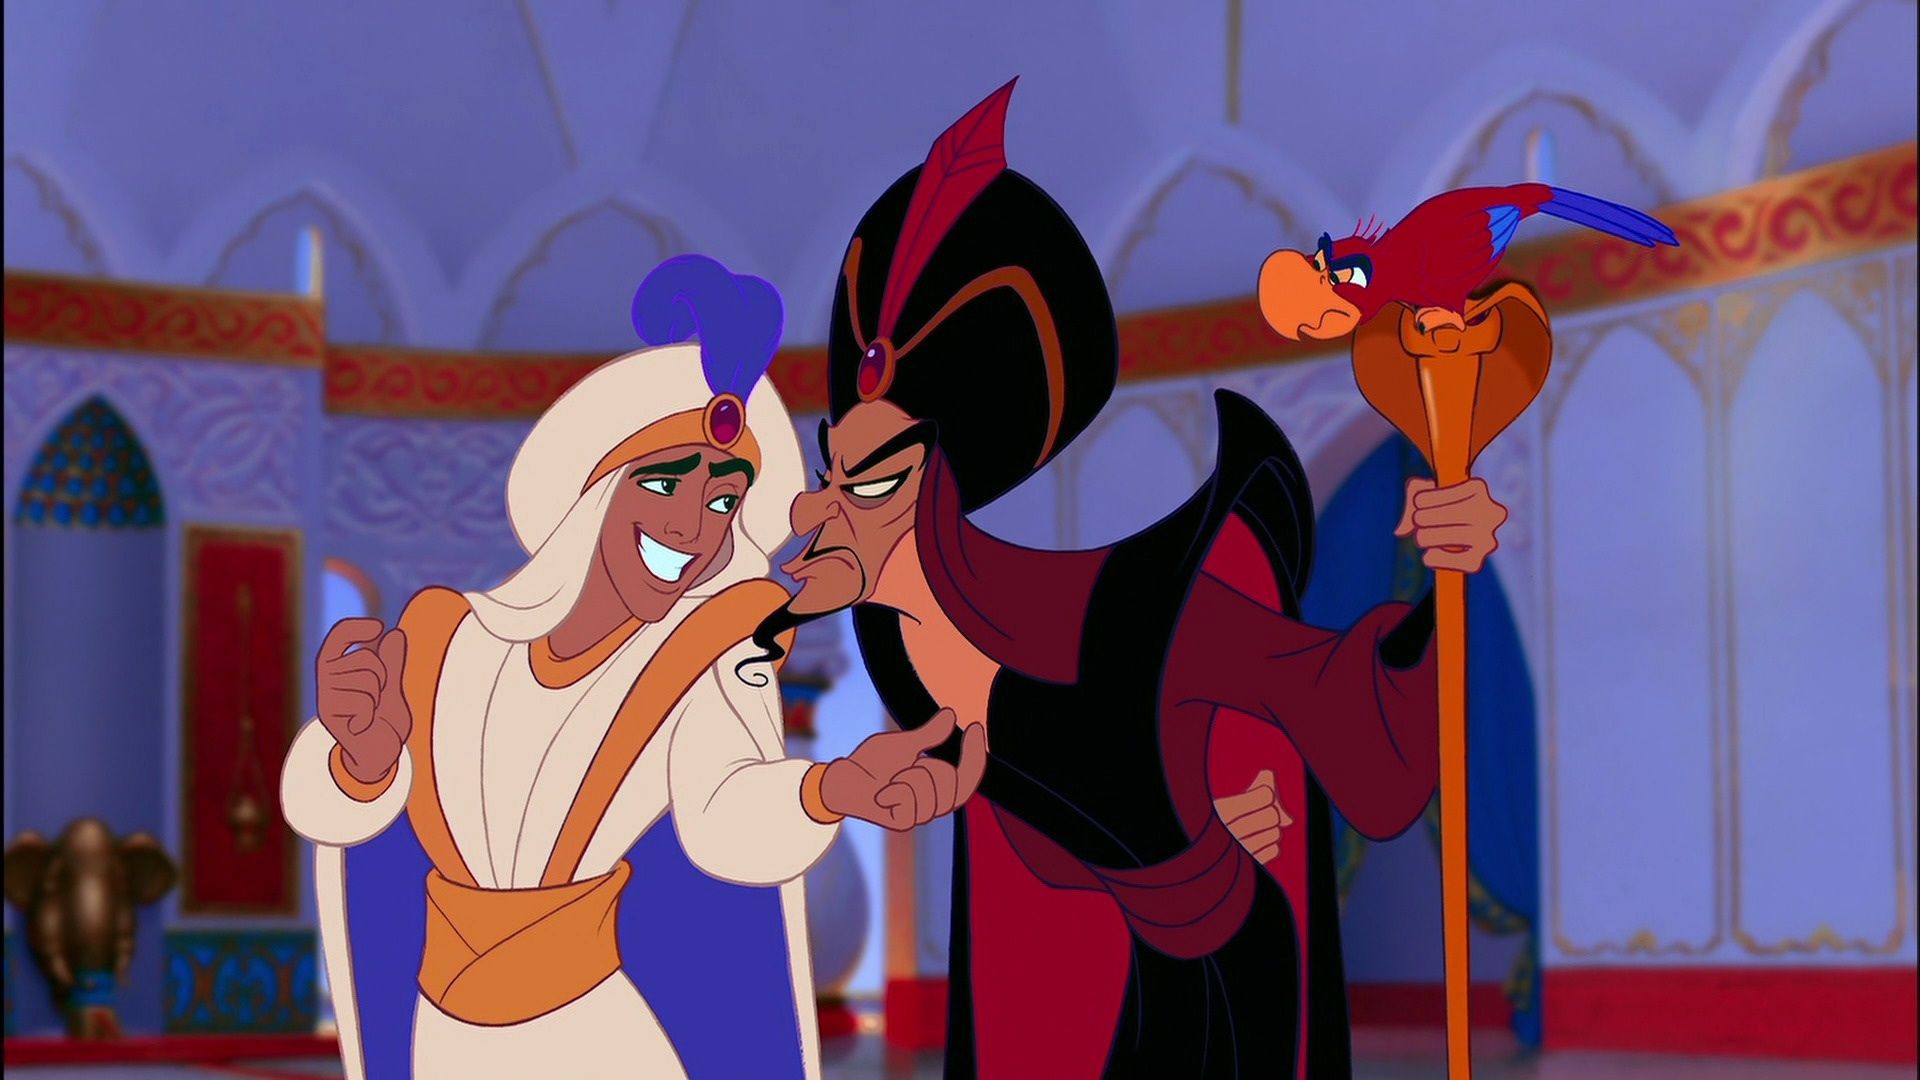 The Return of Jafar background